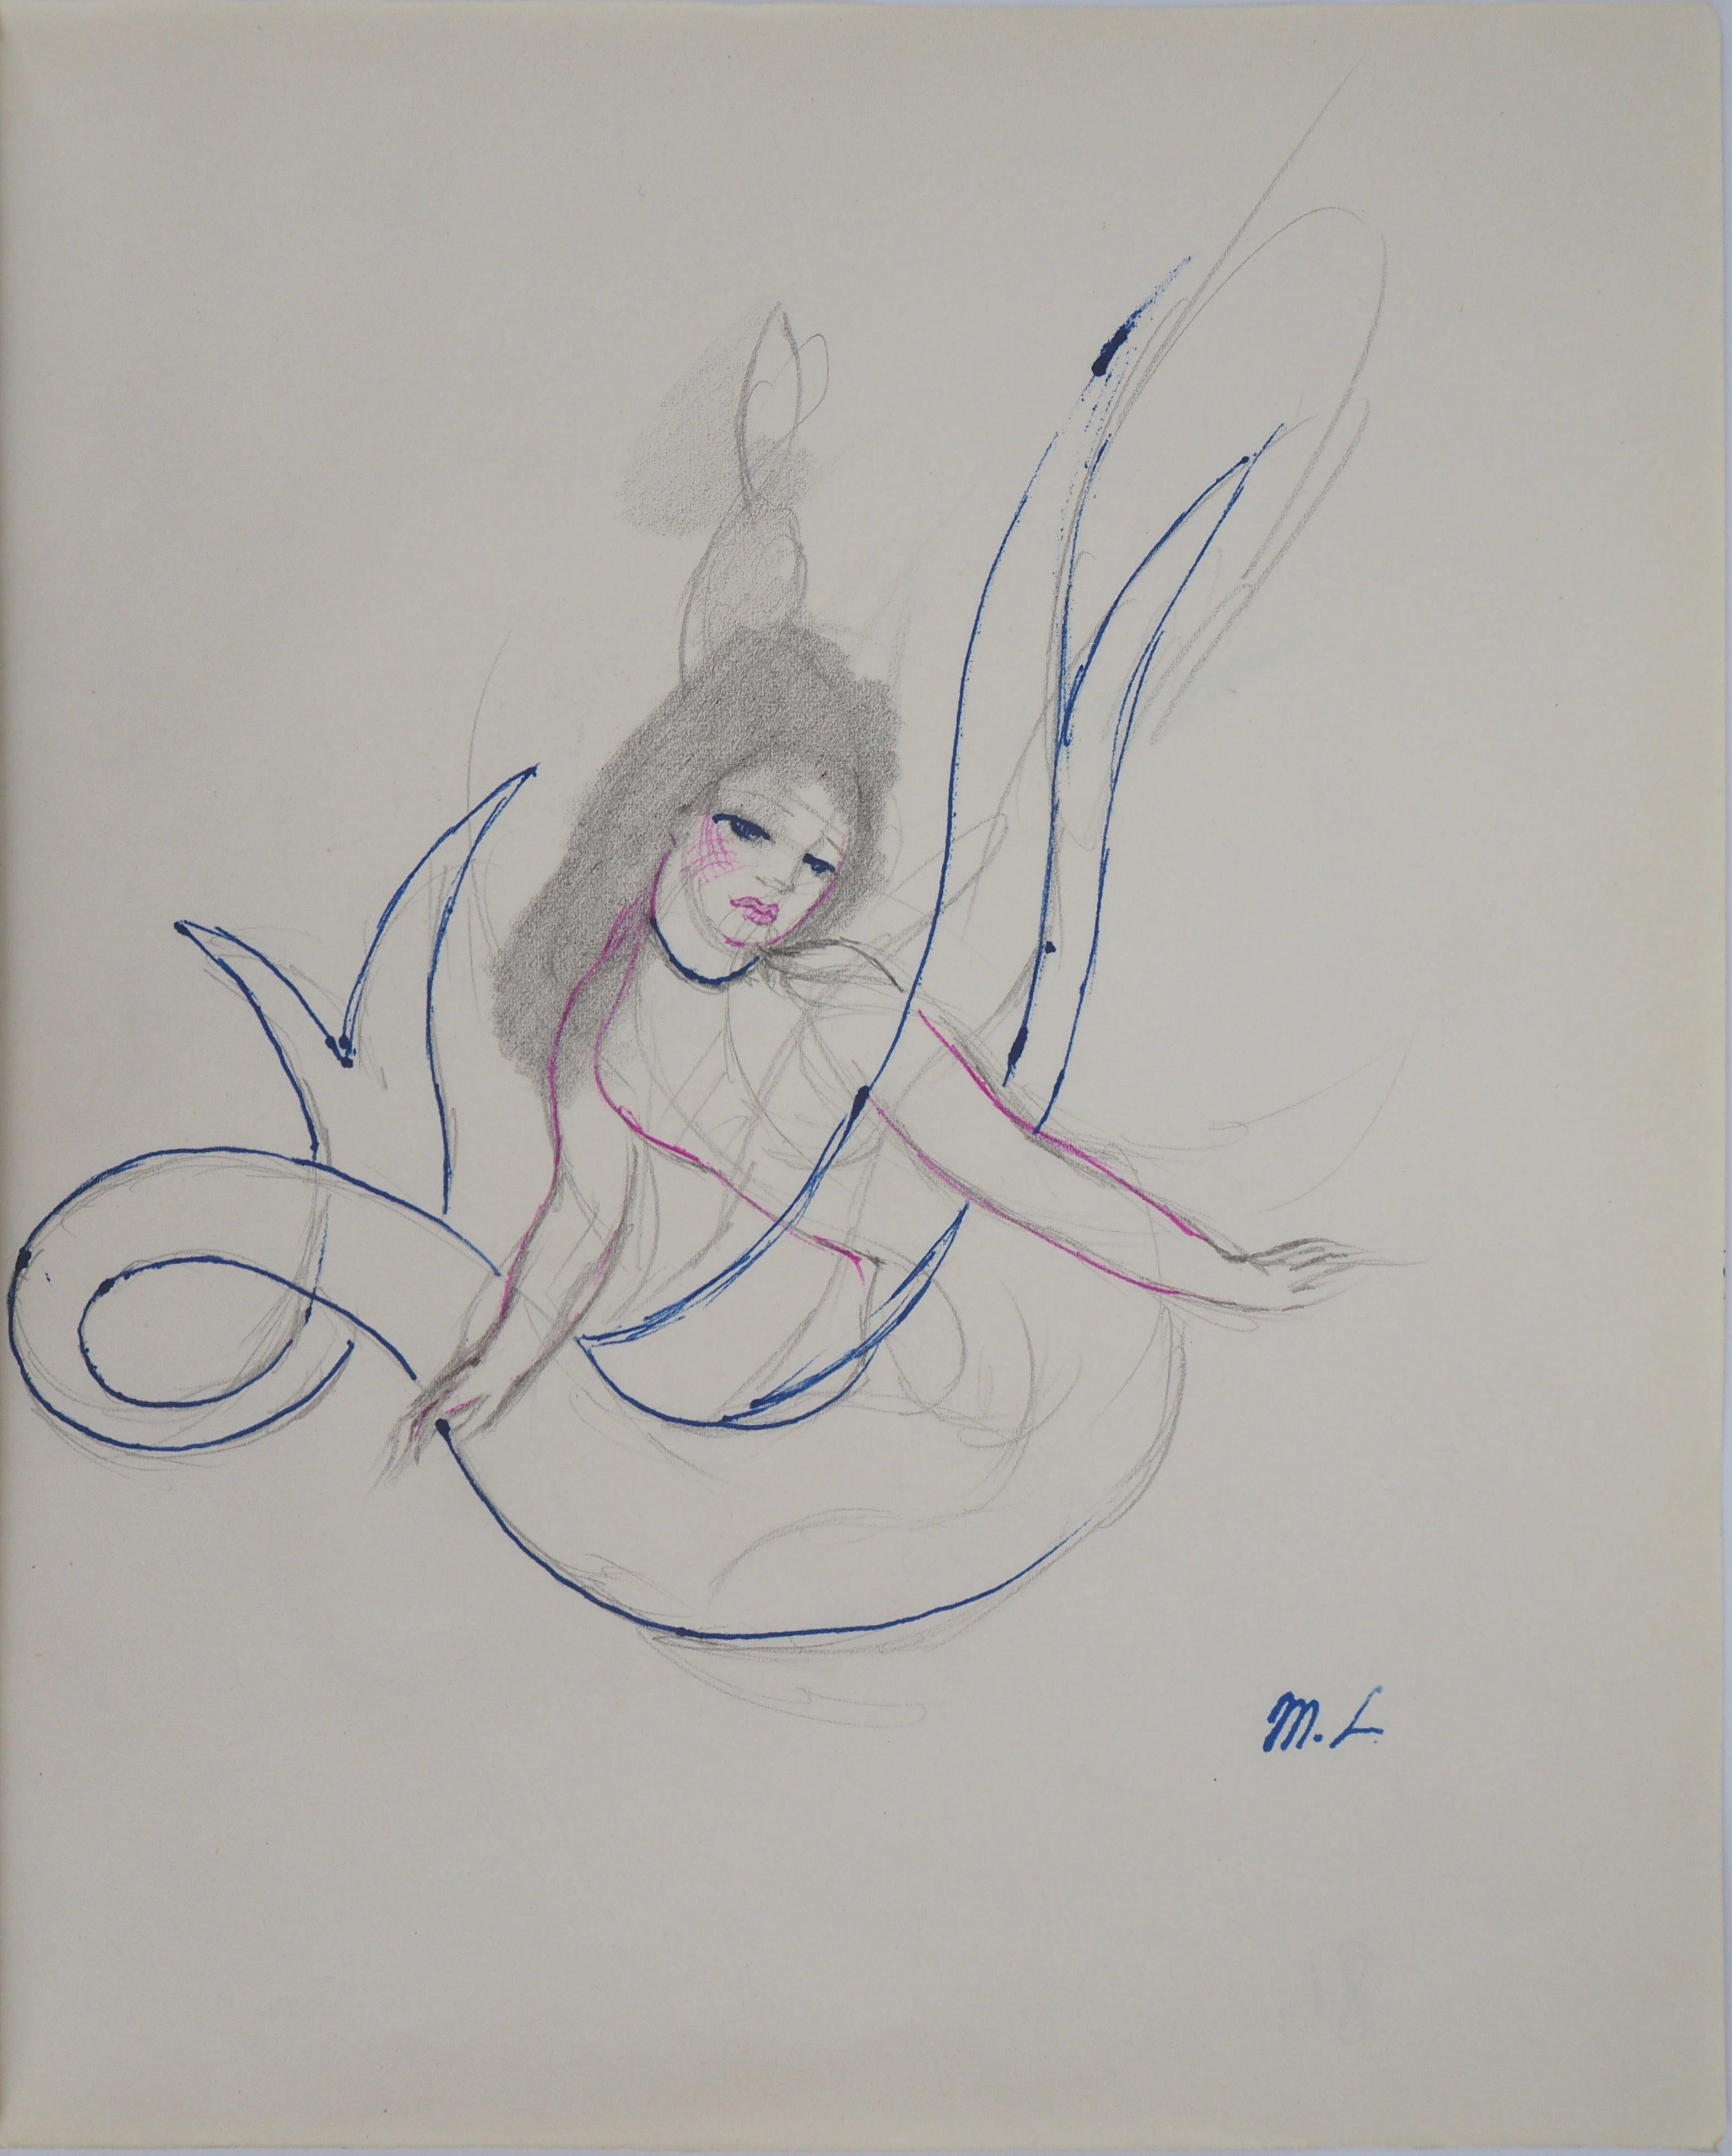 Mermaid - Original ink and pencil drawing, 1953